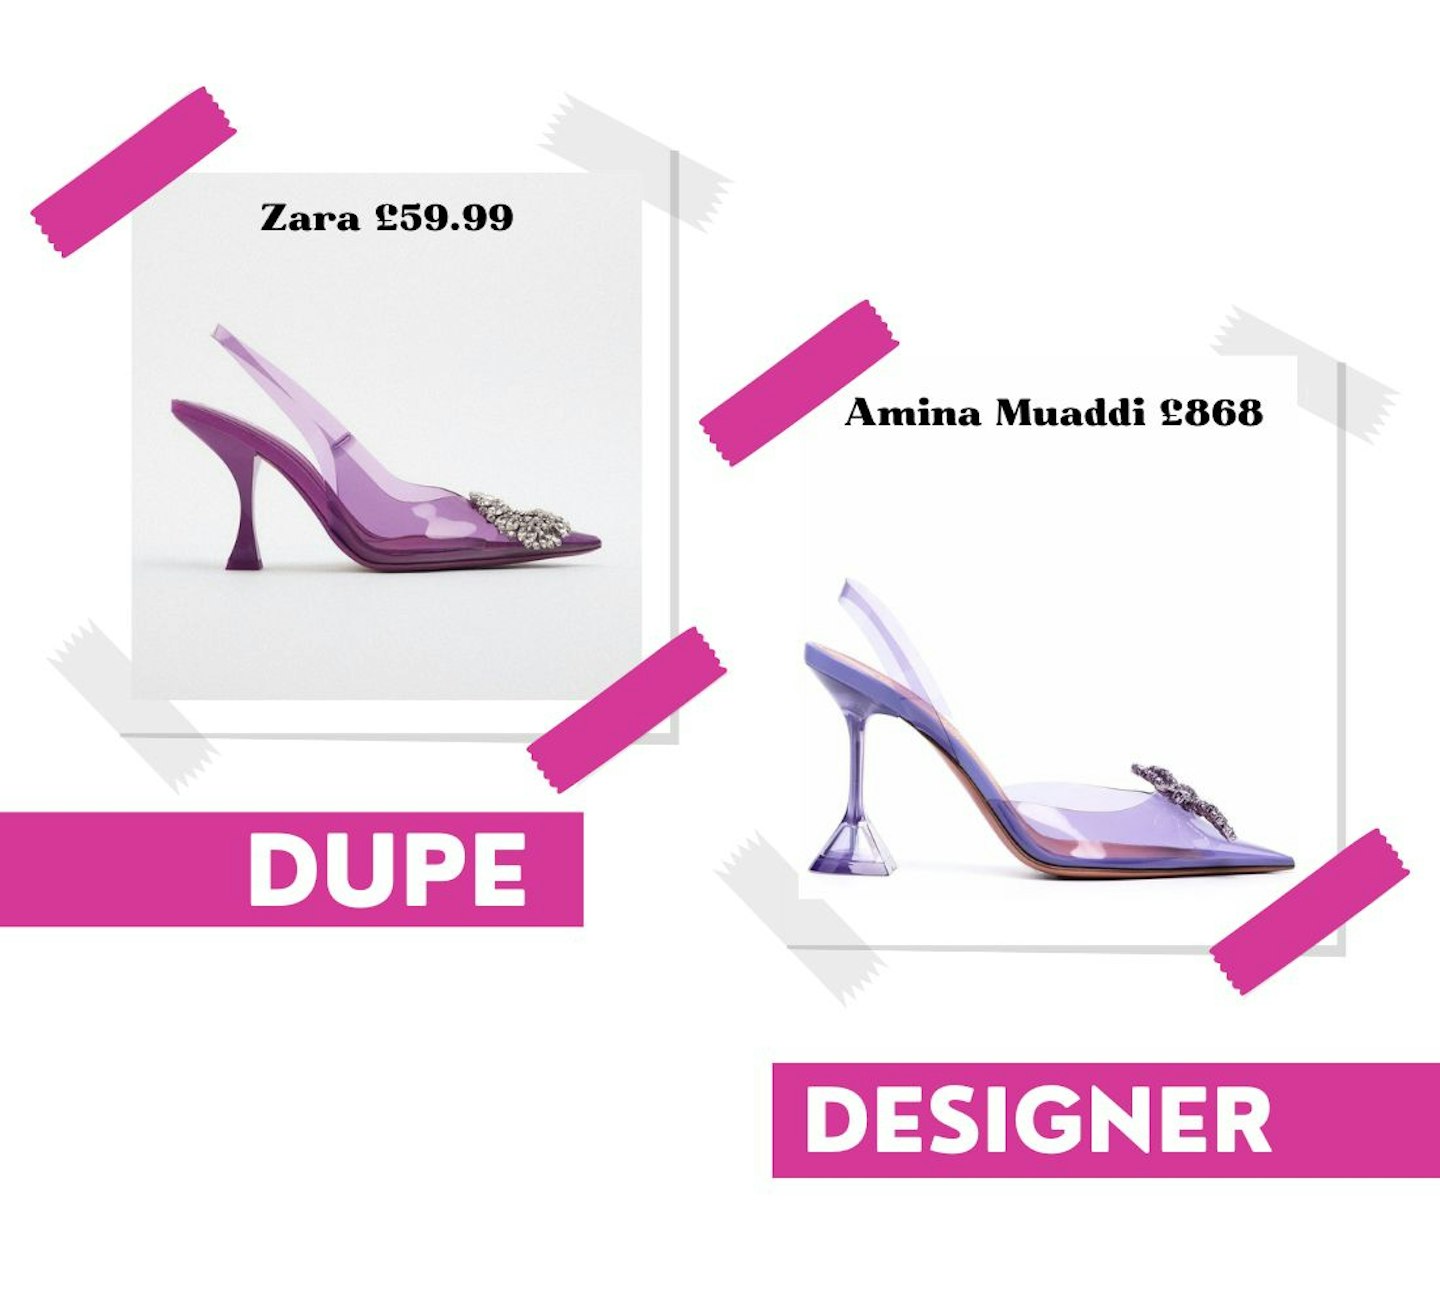 Zara and Amina Muaddi purple perspex heels